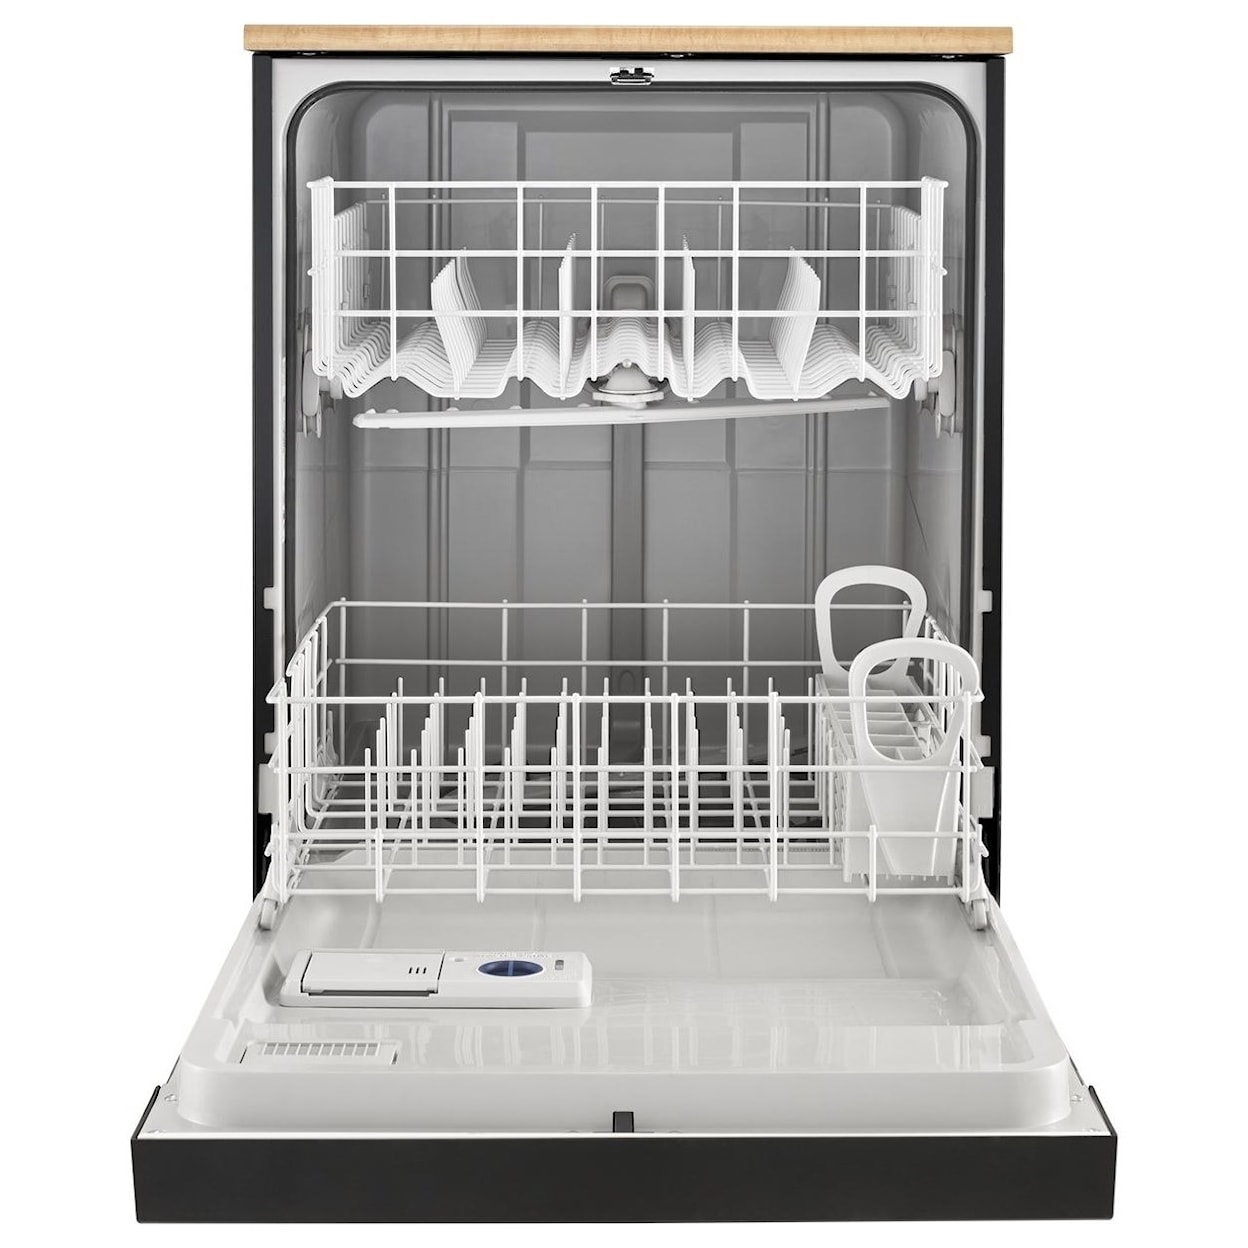 Whirlpool Dishwashers - Whirlpool Heavy-Duty Dishwasher with 1-Hour Wash Cycle